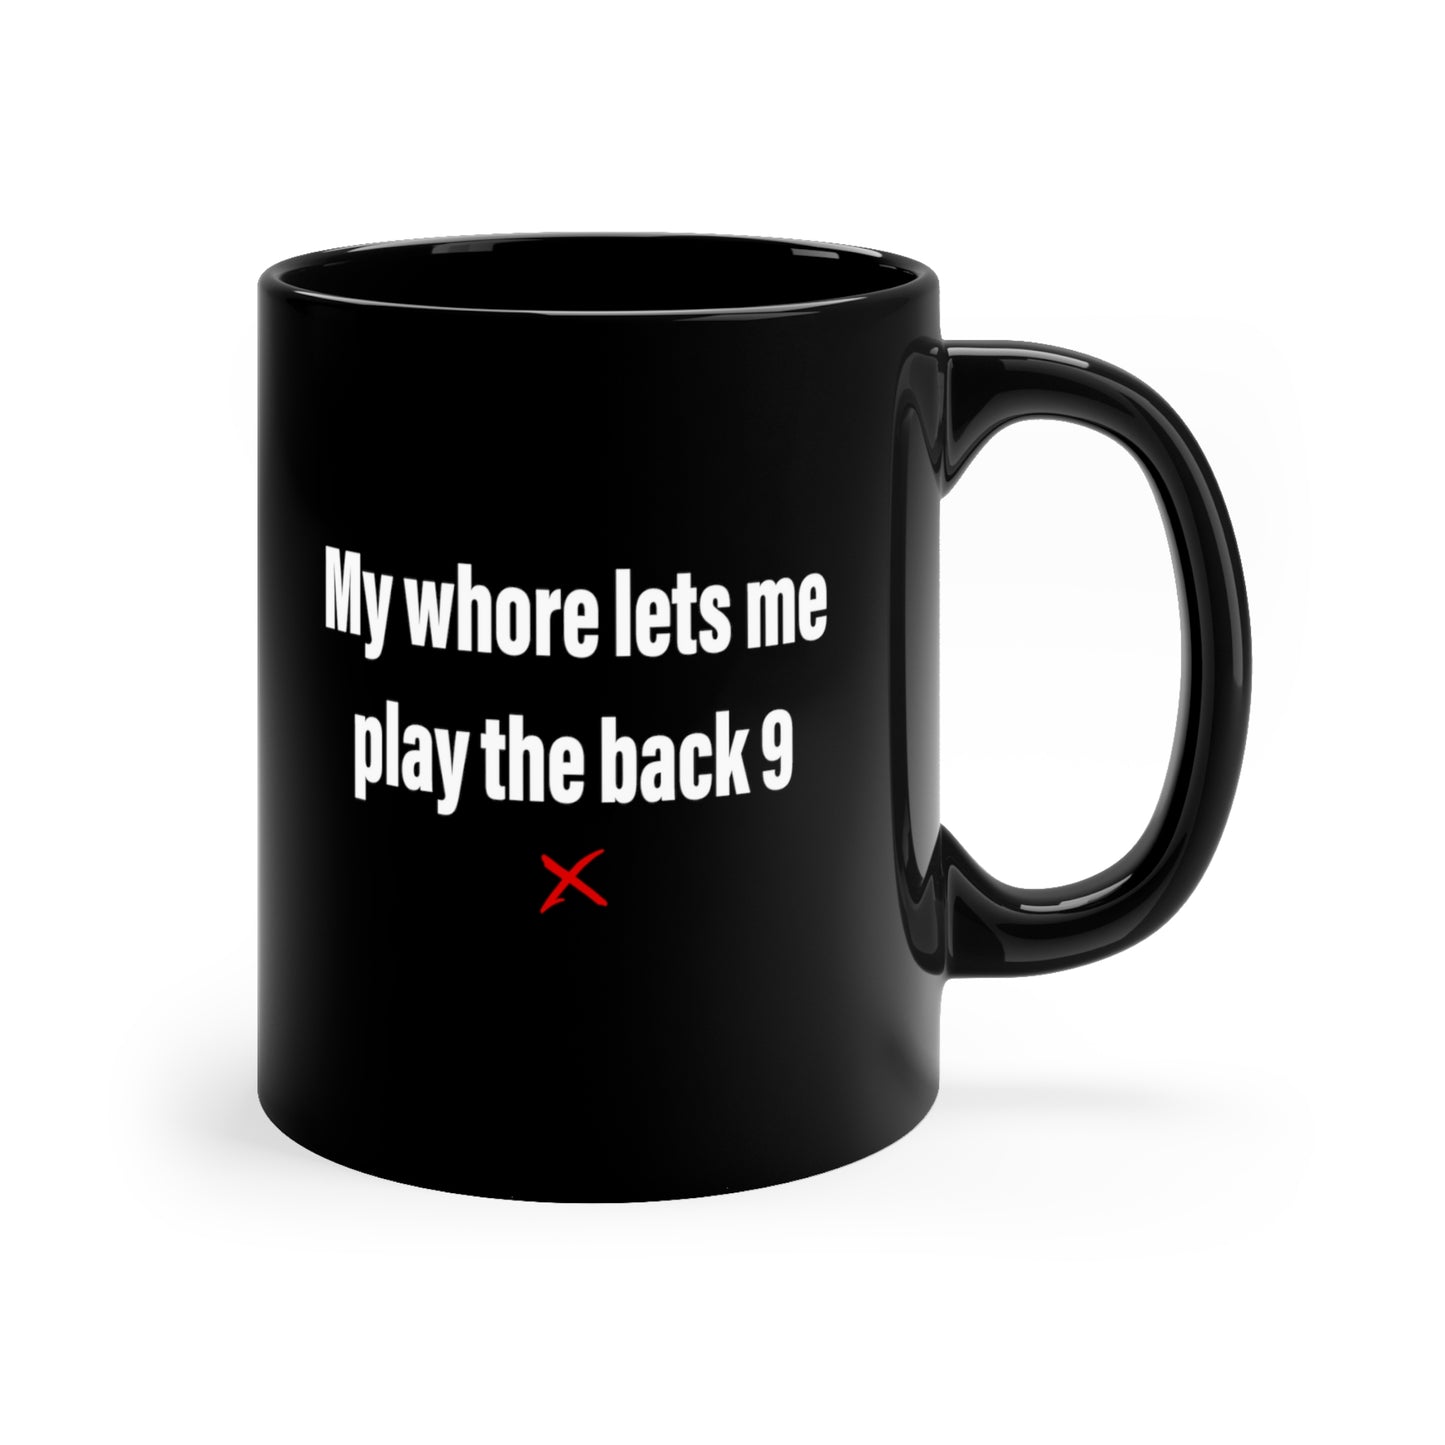 My whore lets me play the back 9 - Mug